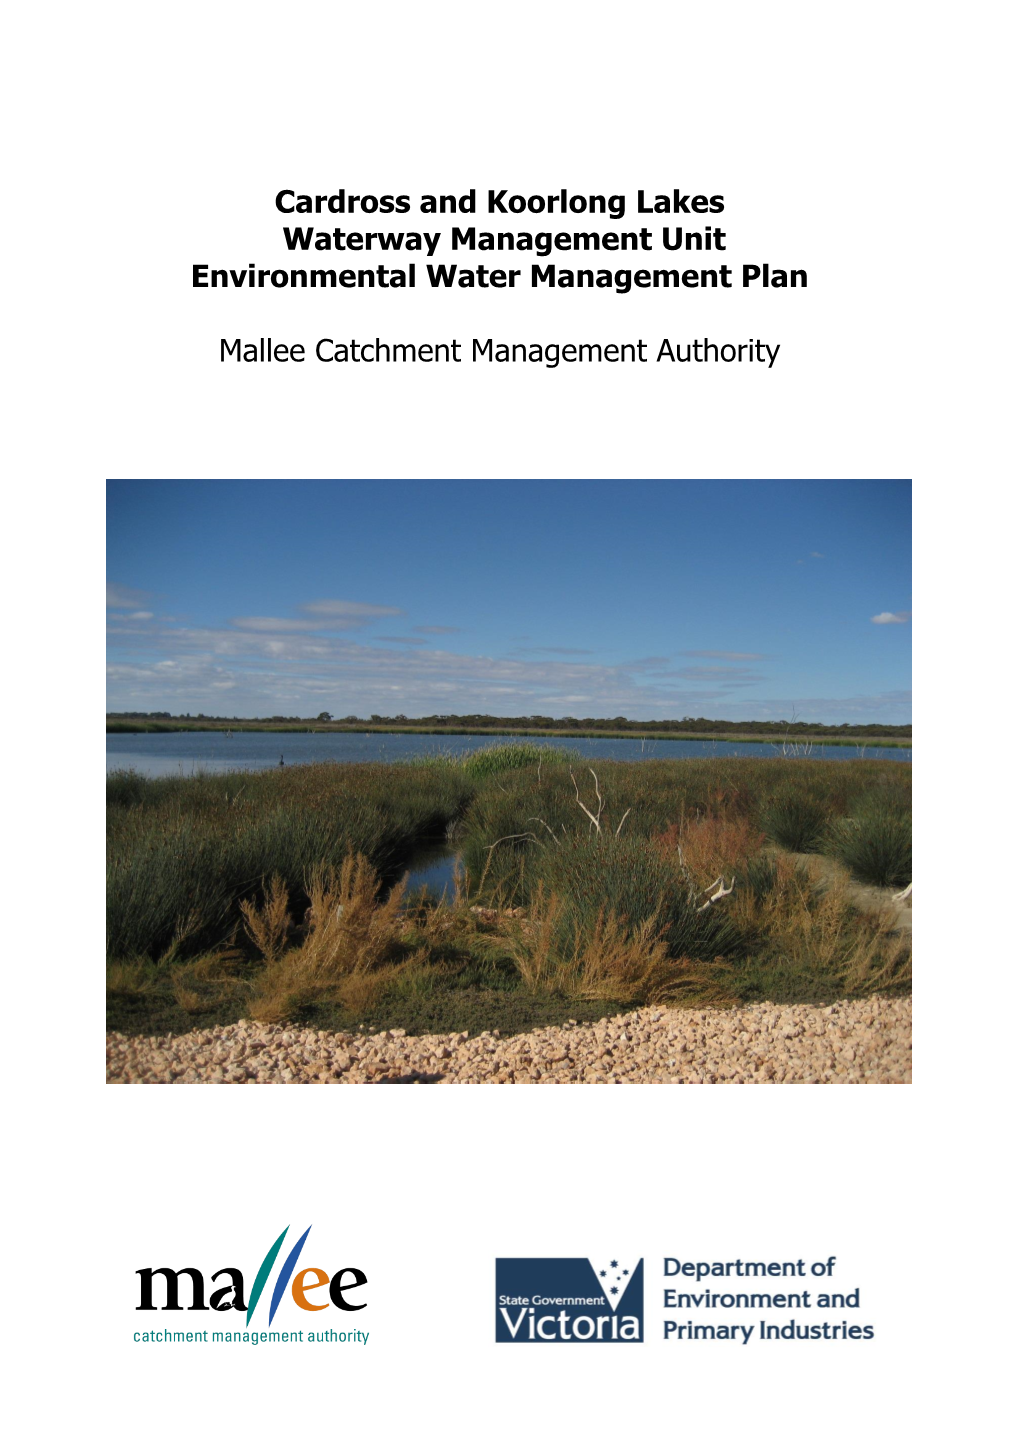 Cardross and Koorlong Lakes Waterway Management Unit Environmental Water Management Plan